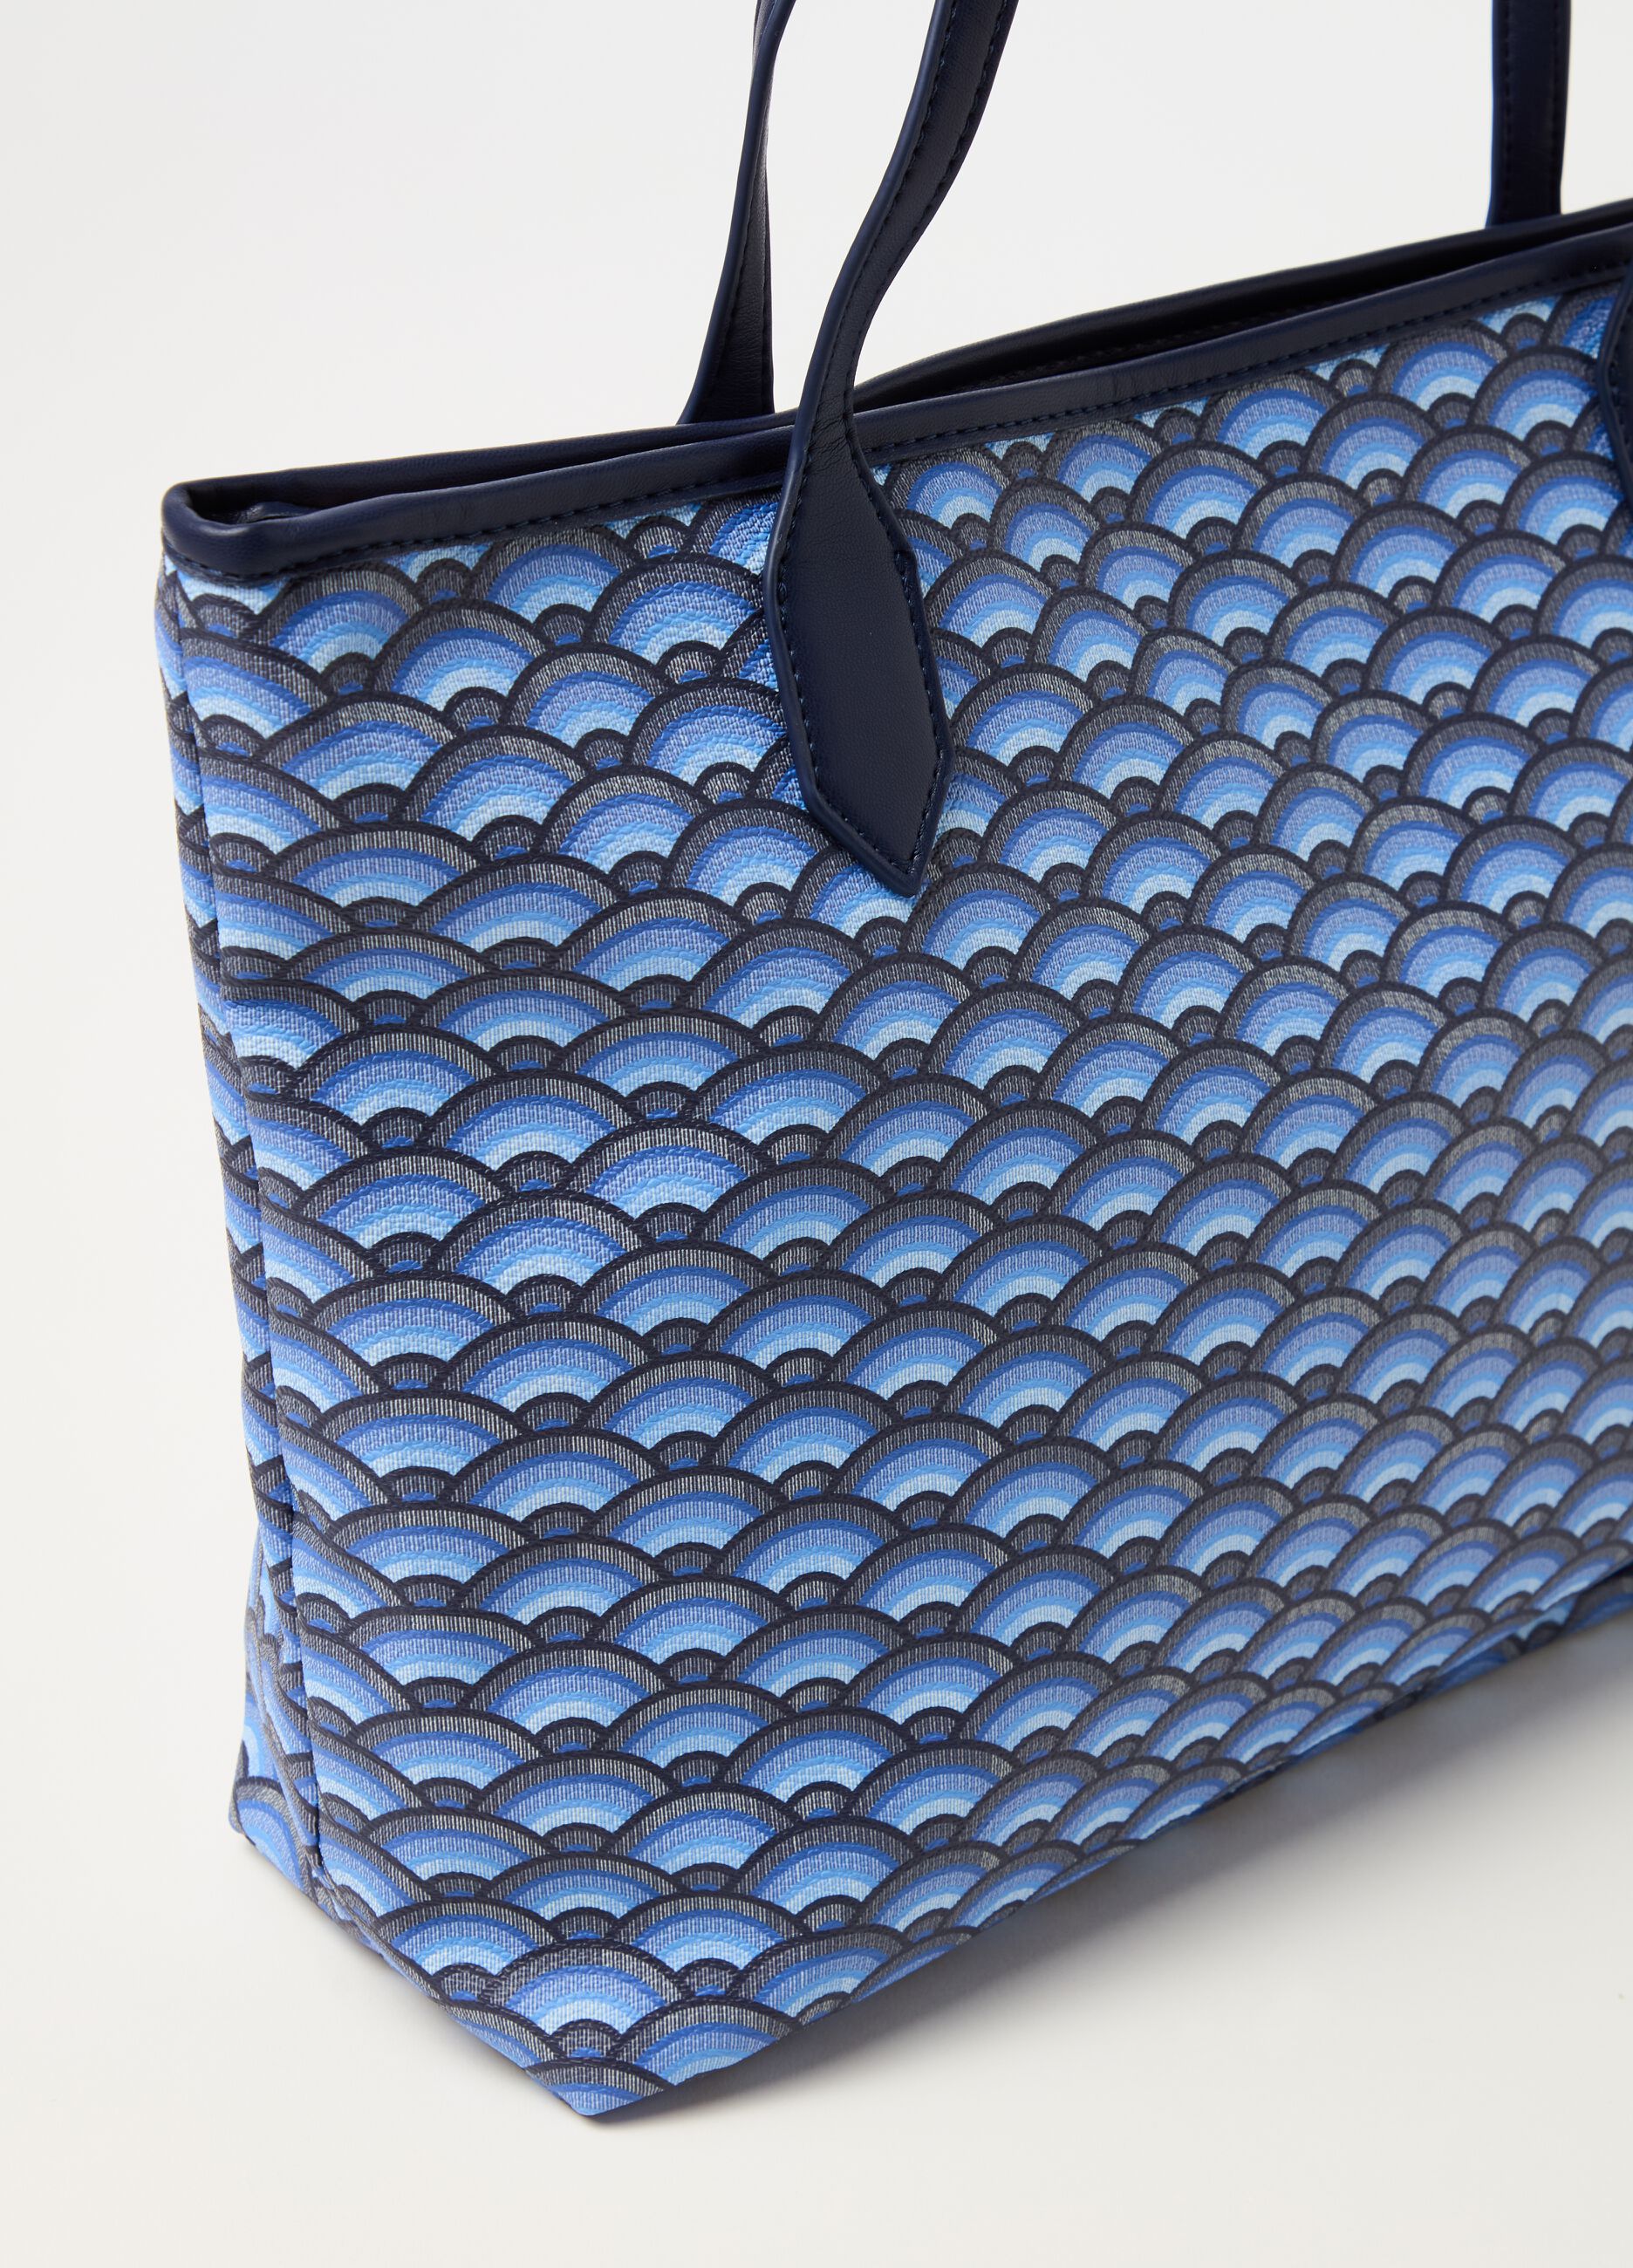 Shopping bag with geometric print